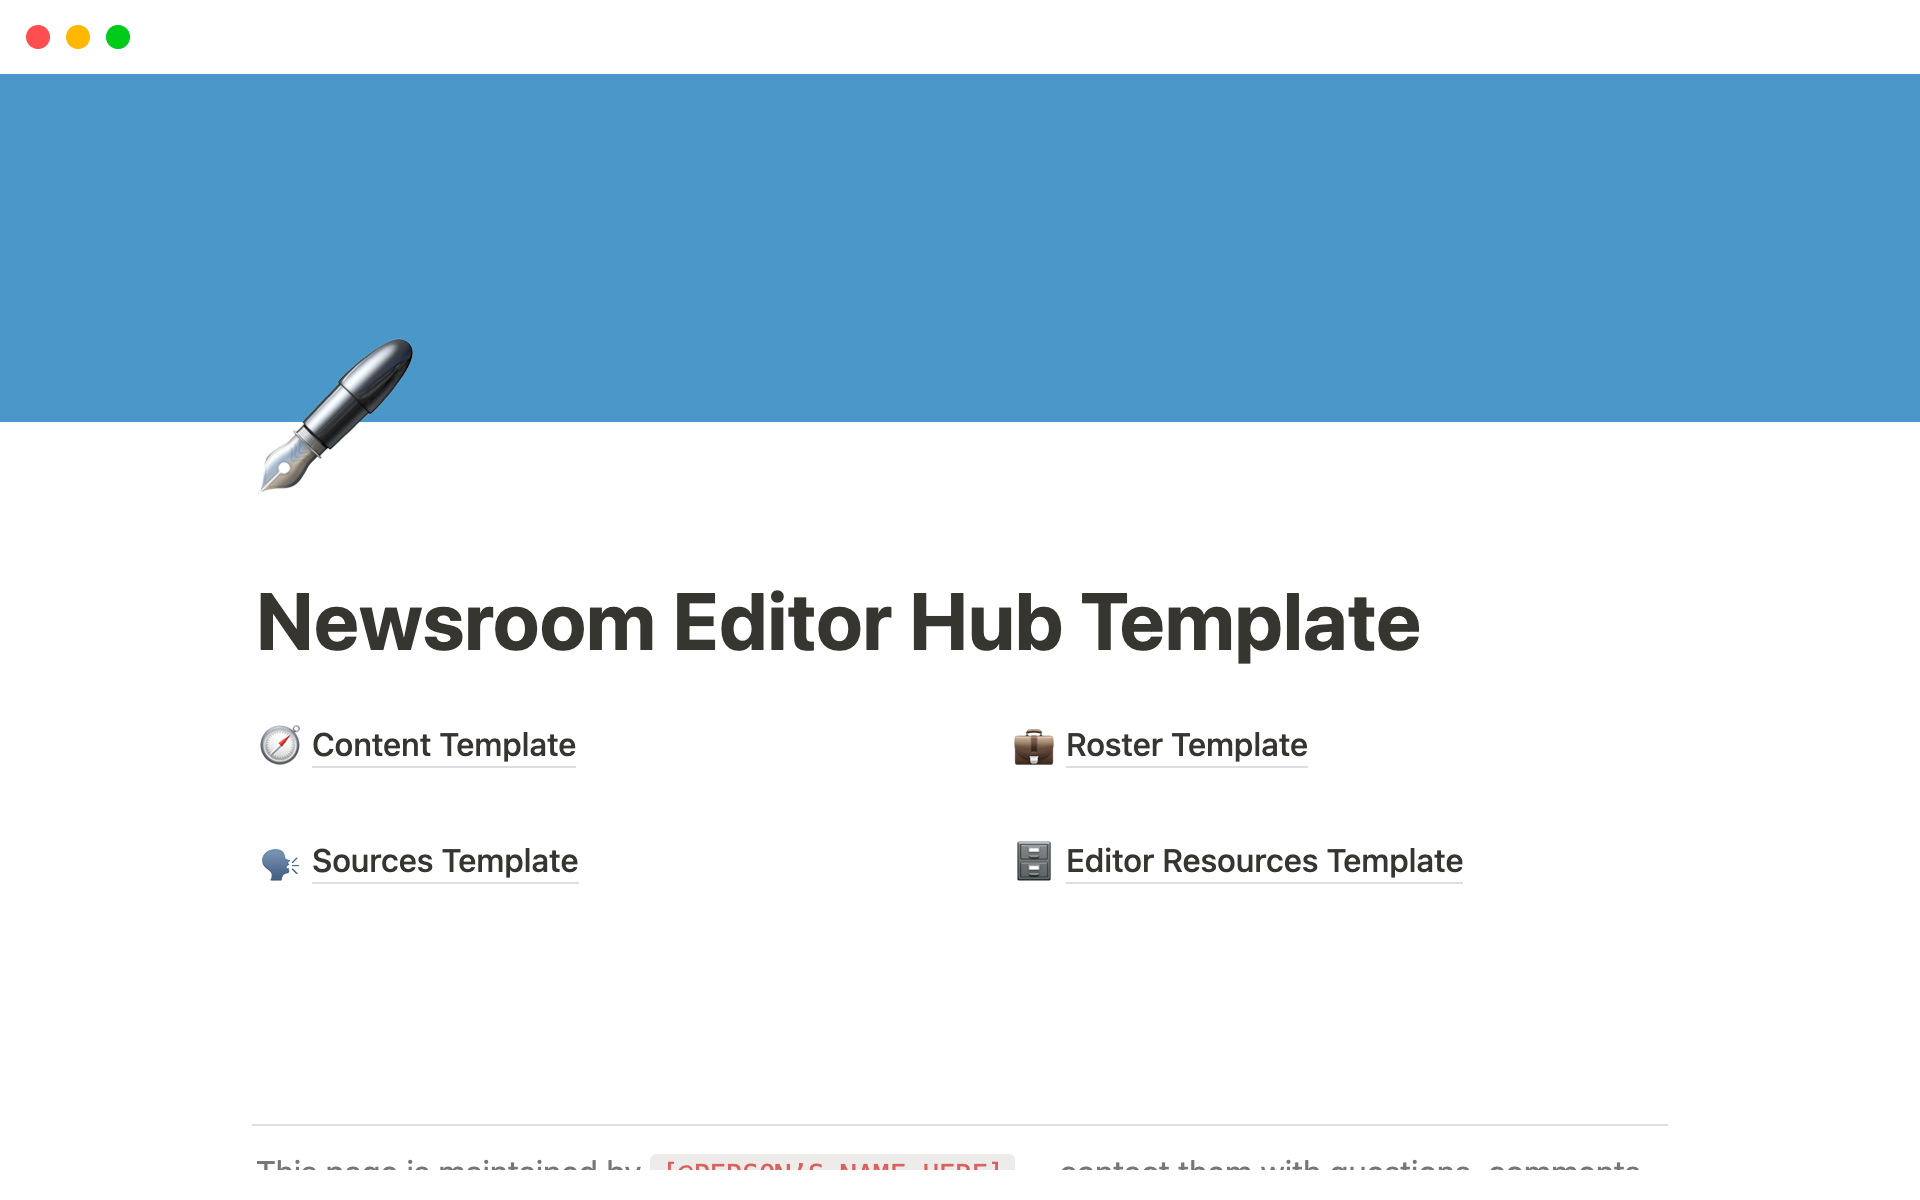 Vista previa de una plantilla para Newsroom Editor Hub Template